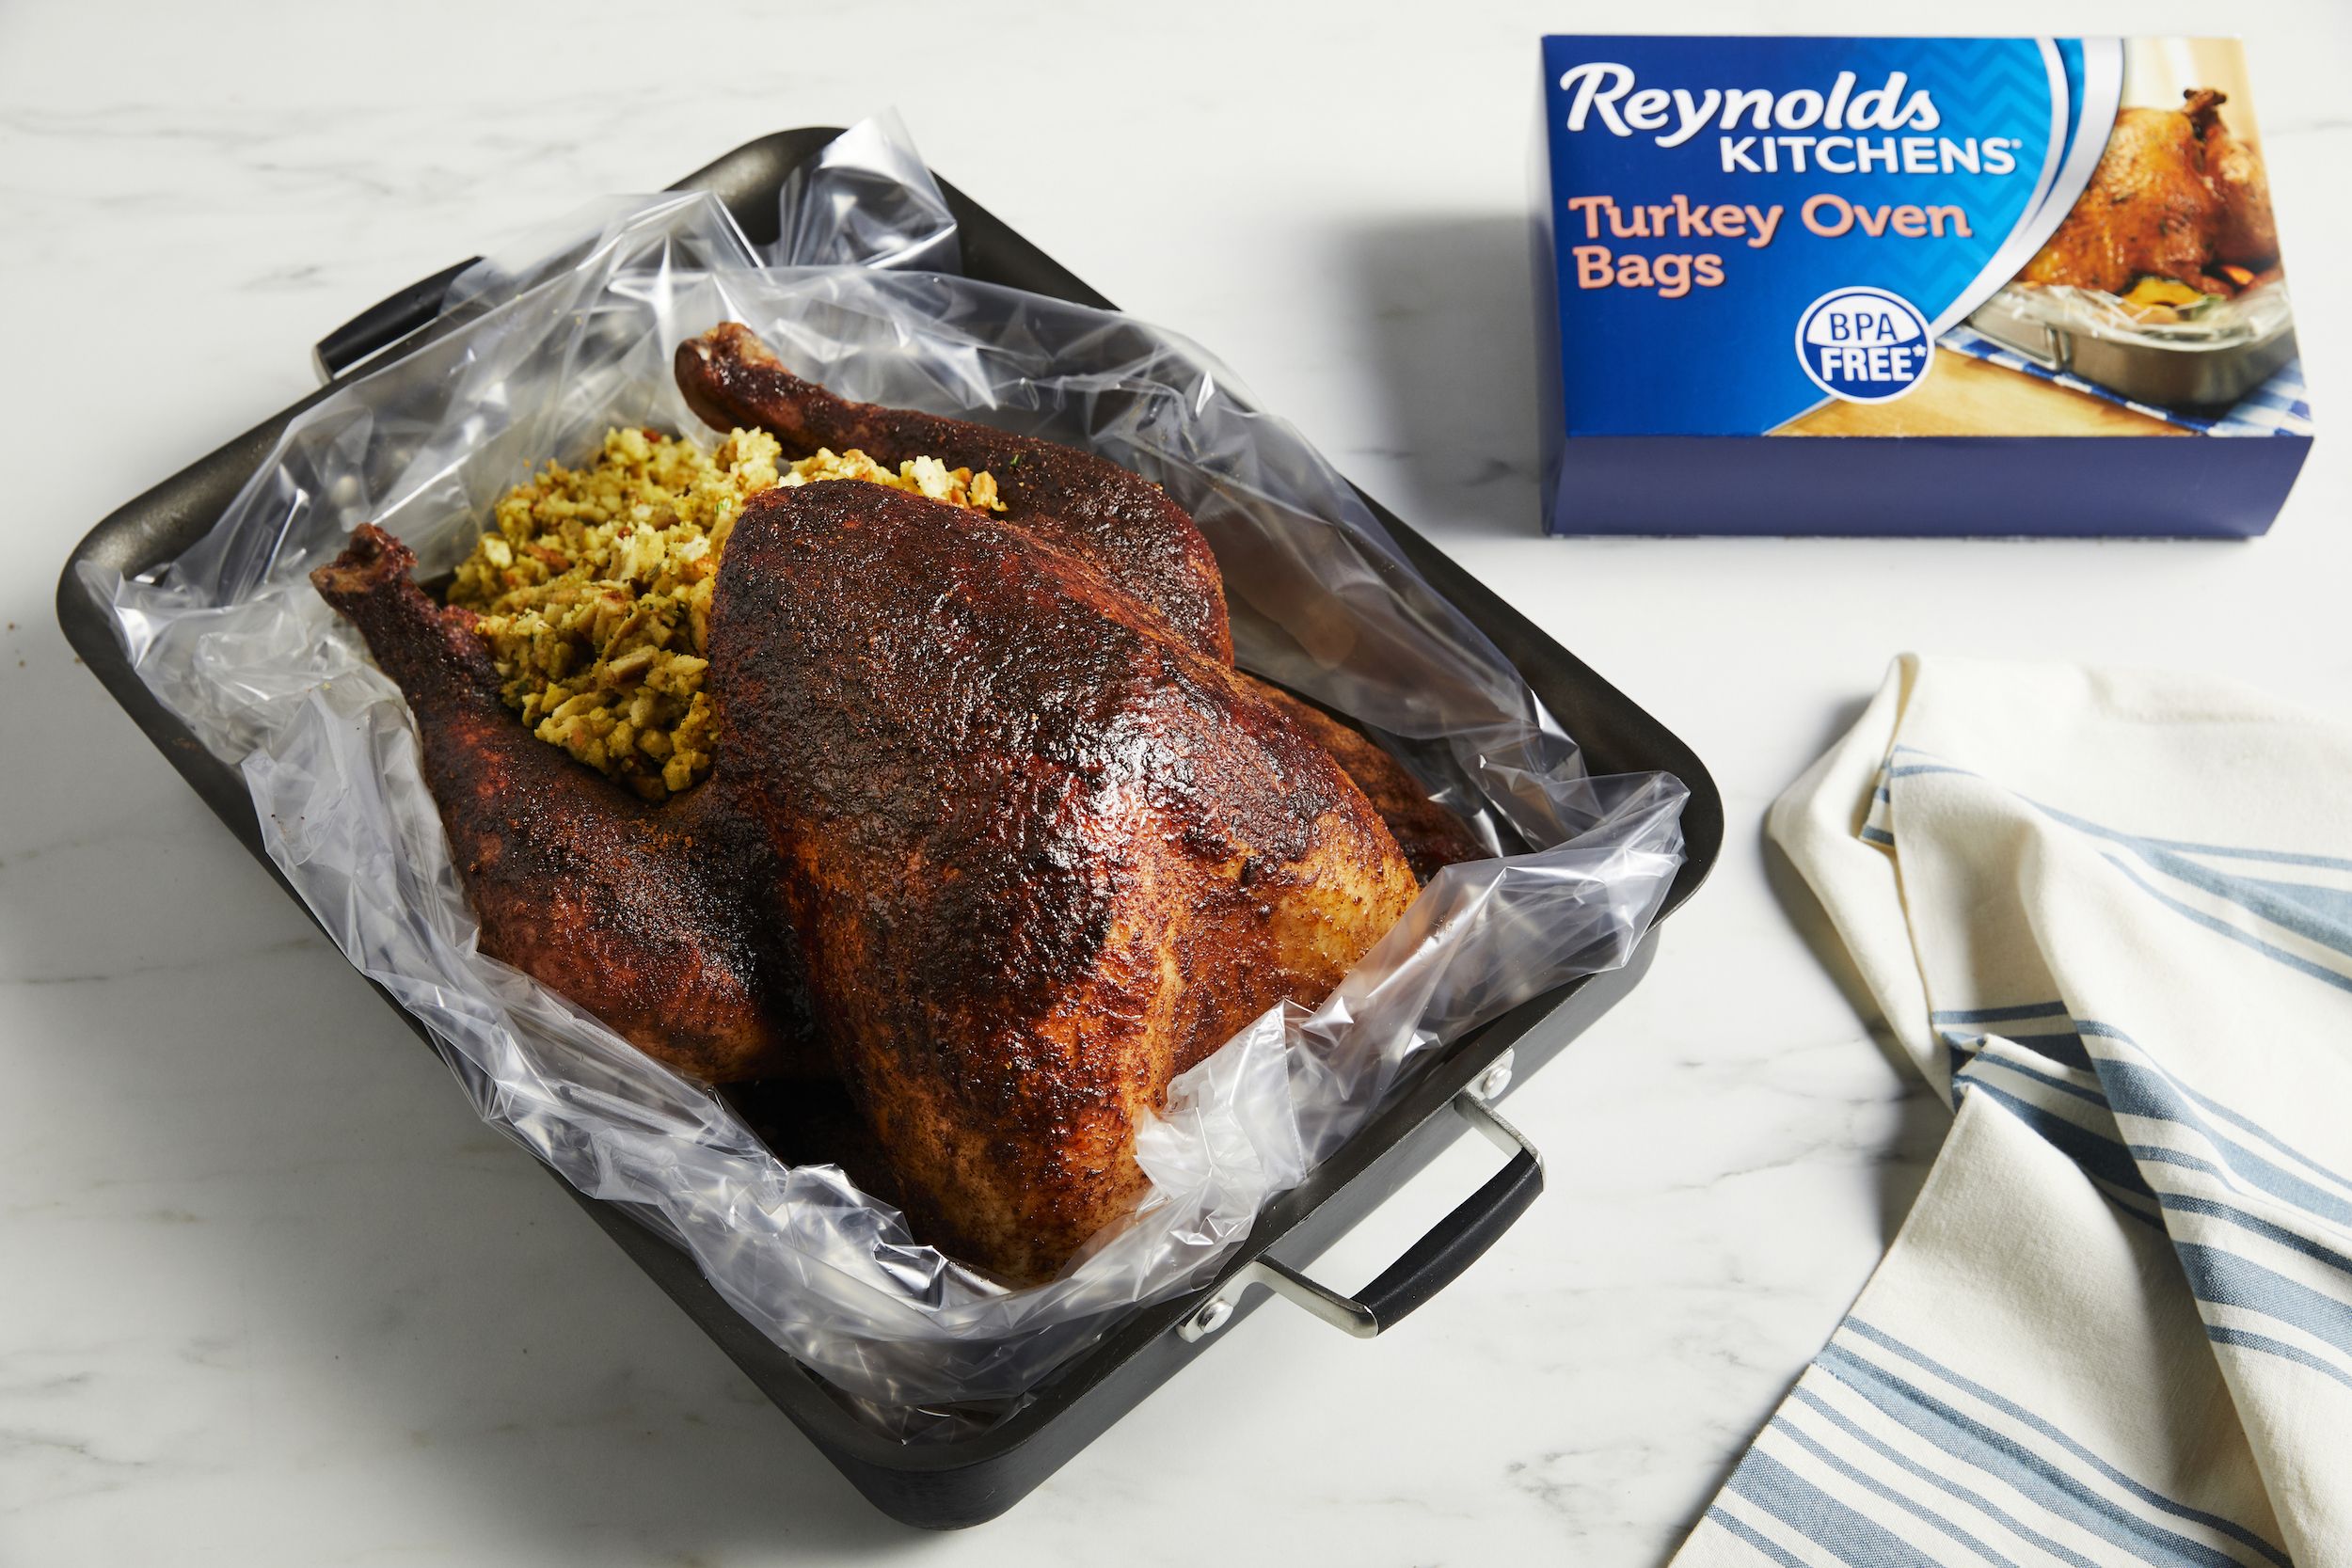 Reynolds Made Mac & Cheese And Pumpkin Spice Turkey Recipes